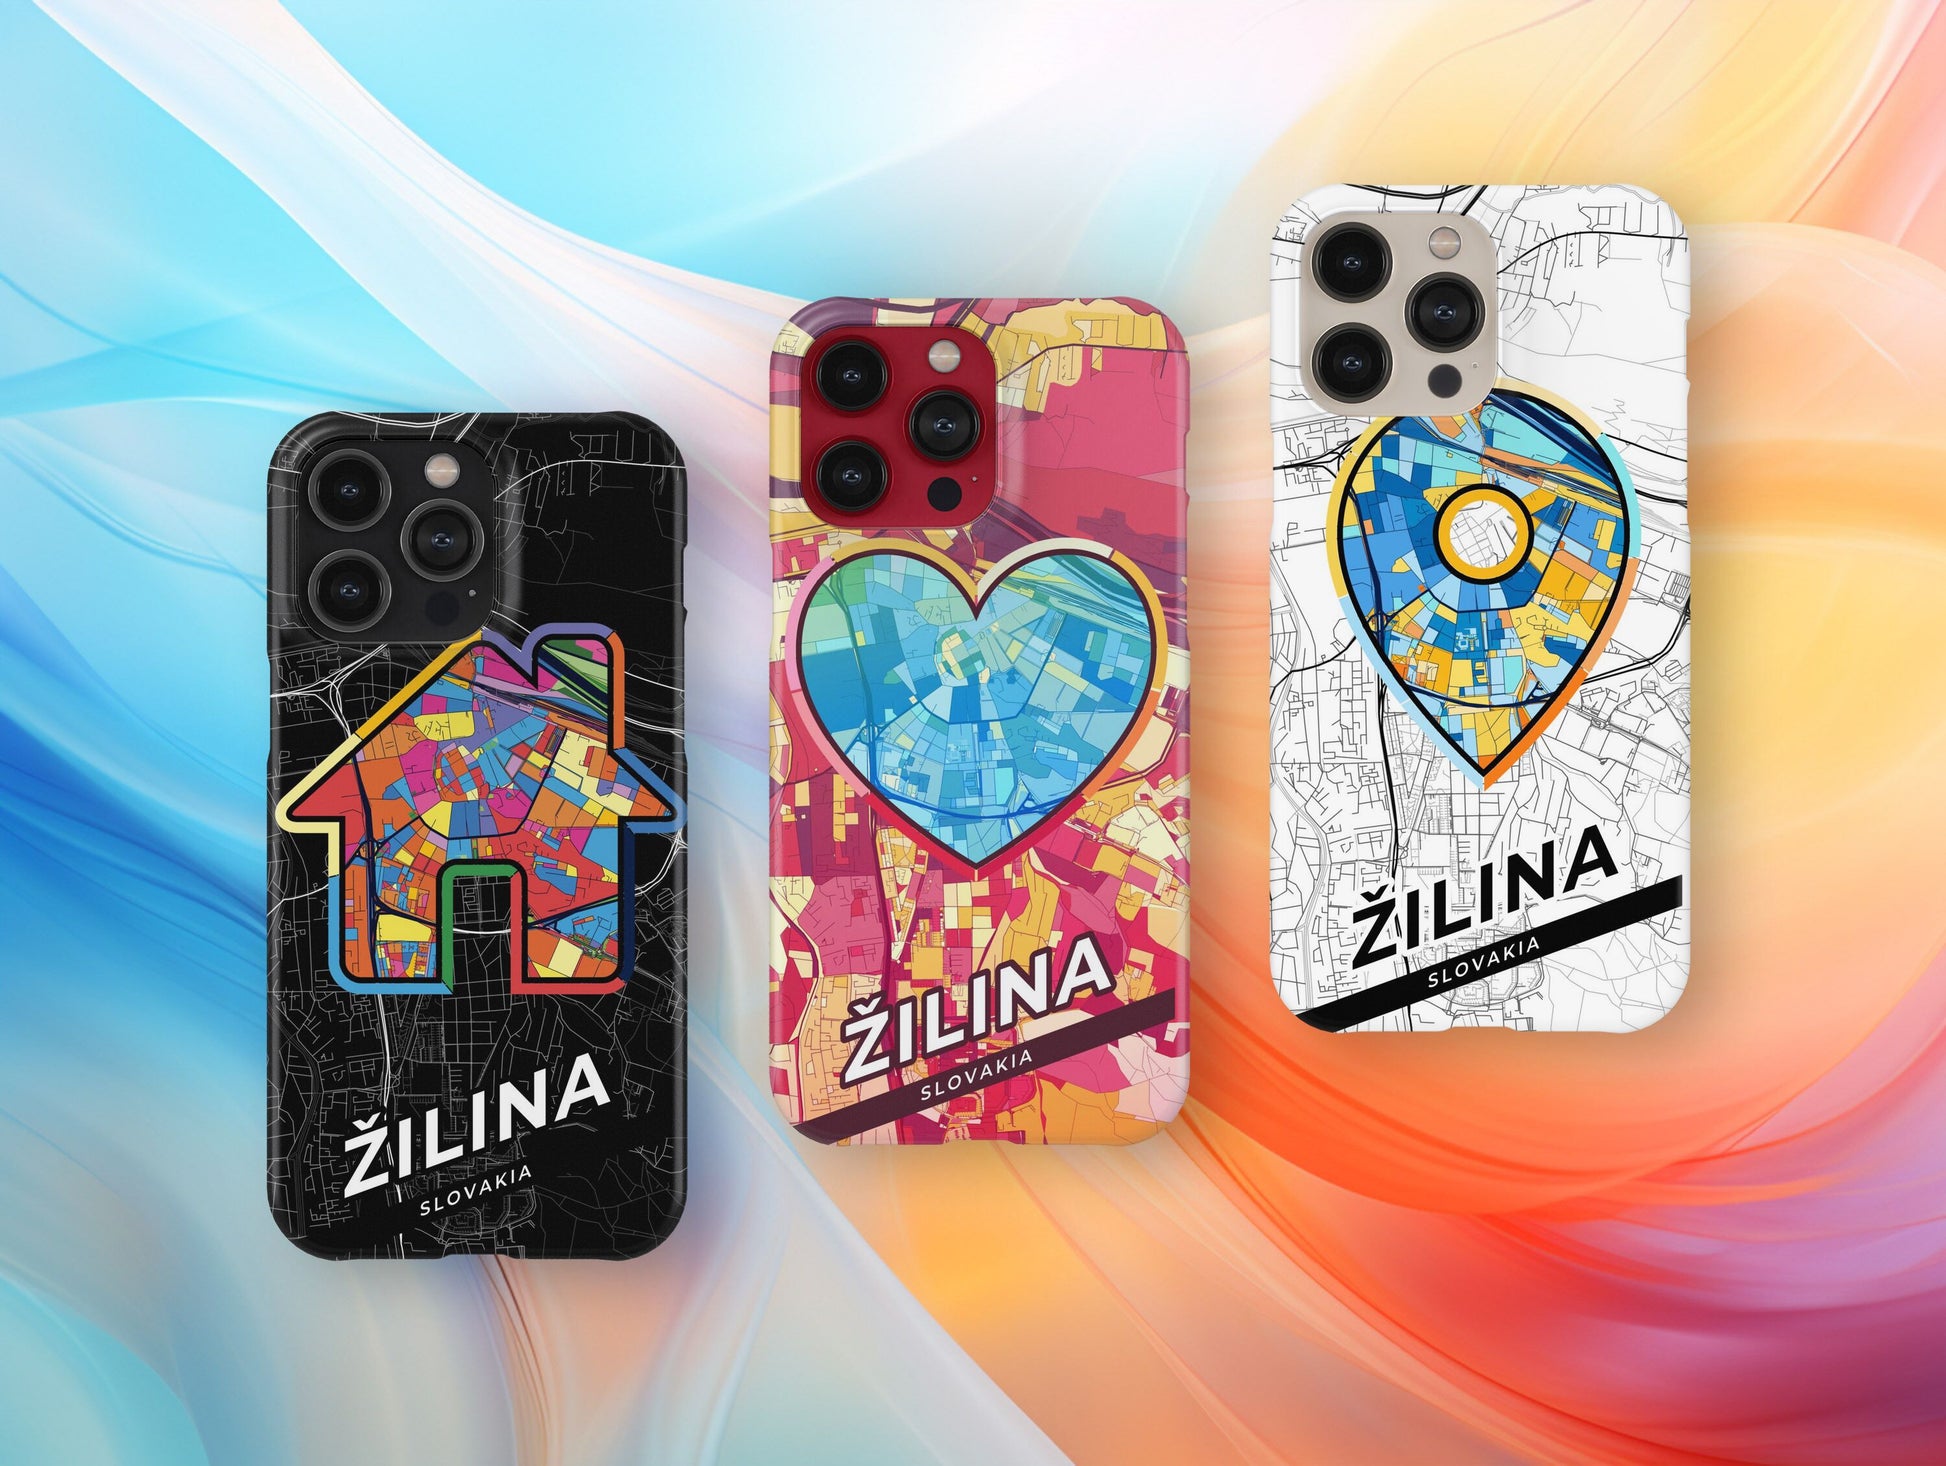 Žilina Slovakia slim phone case with colorful icon